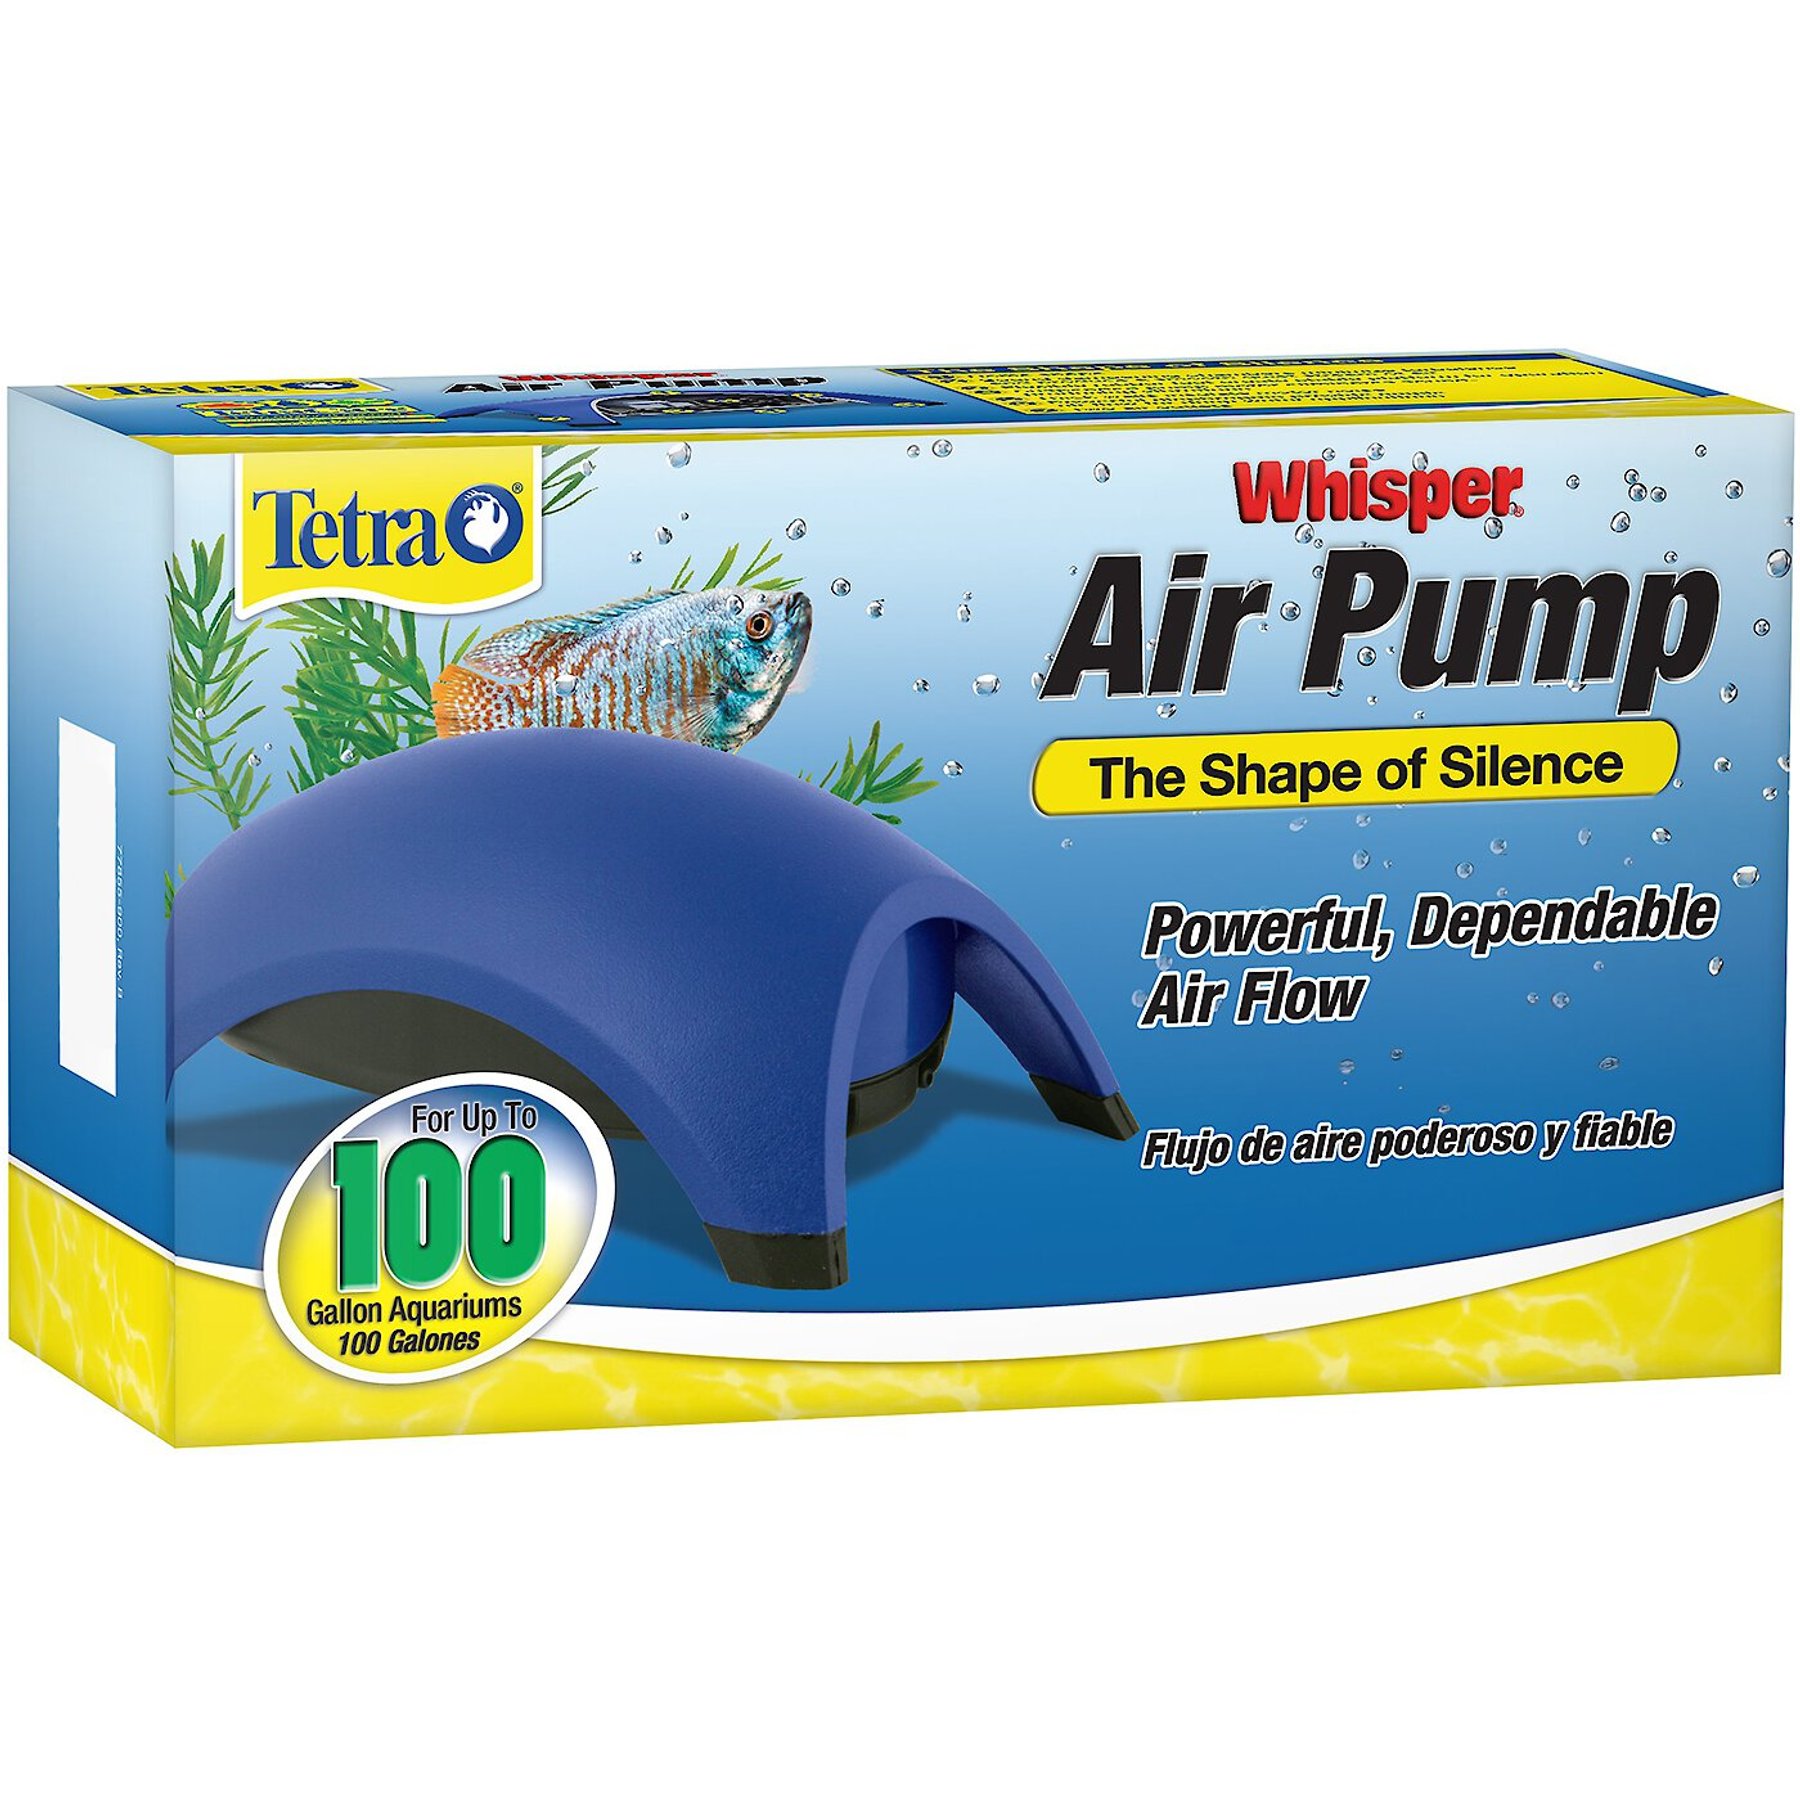 Tetra Pond Air Pump Kit 100